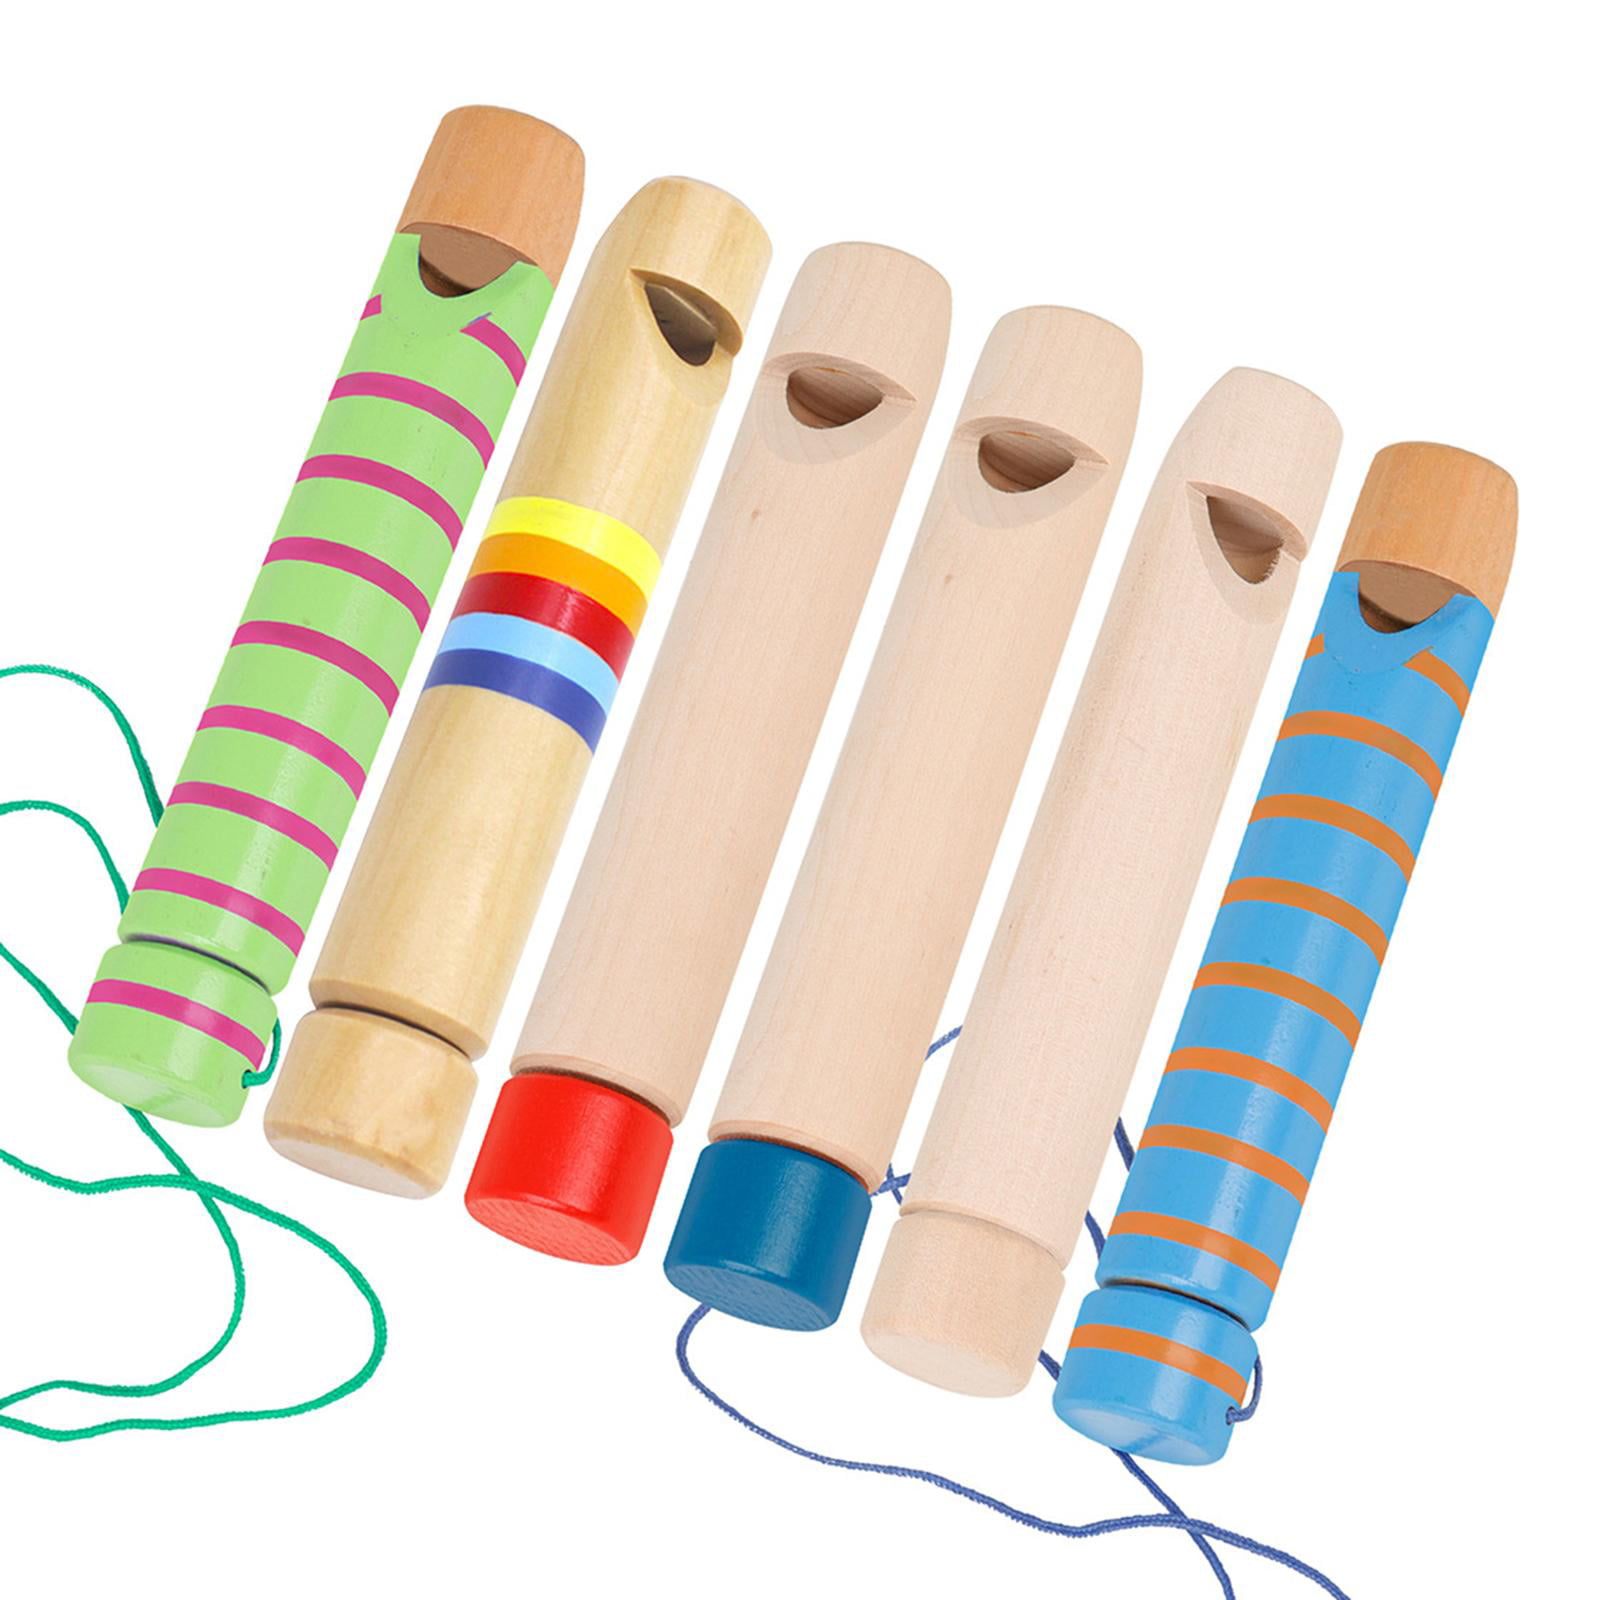 Baby wooden flute whistle toys educational toys kids musical instrumentSK 